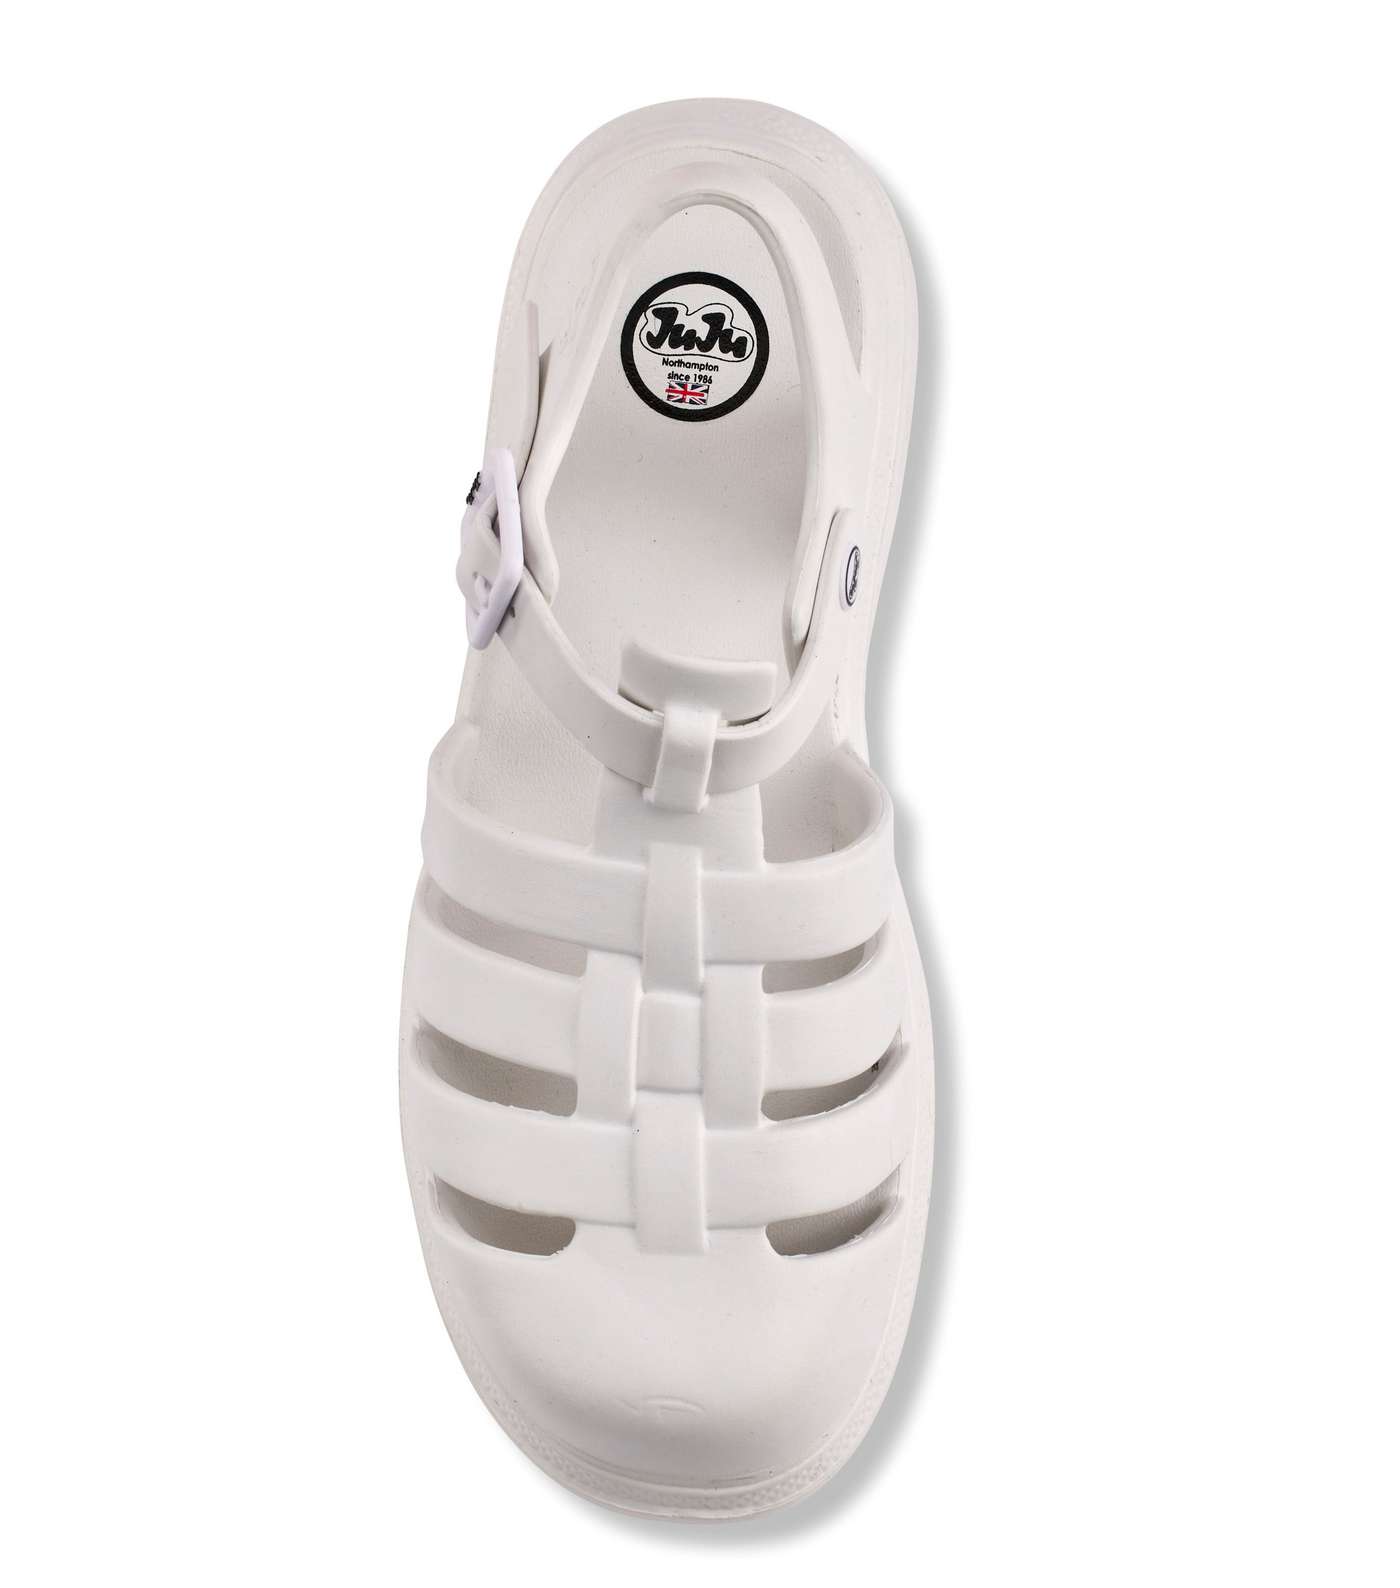 JUJU White Chunky Jelly Sandals Image 4